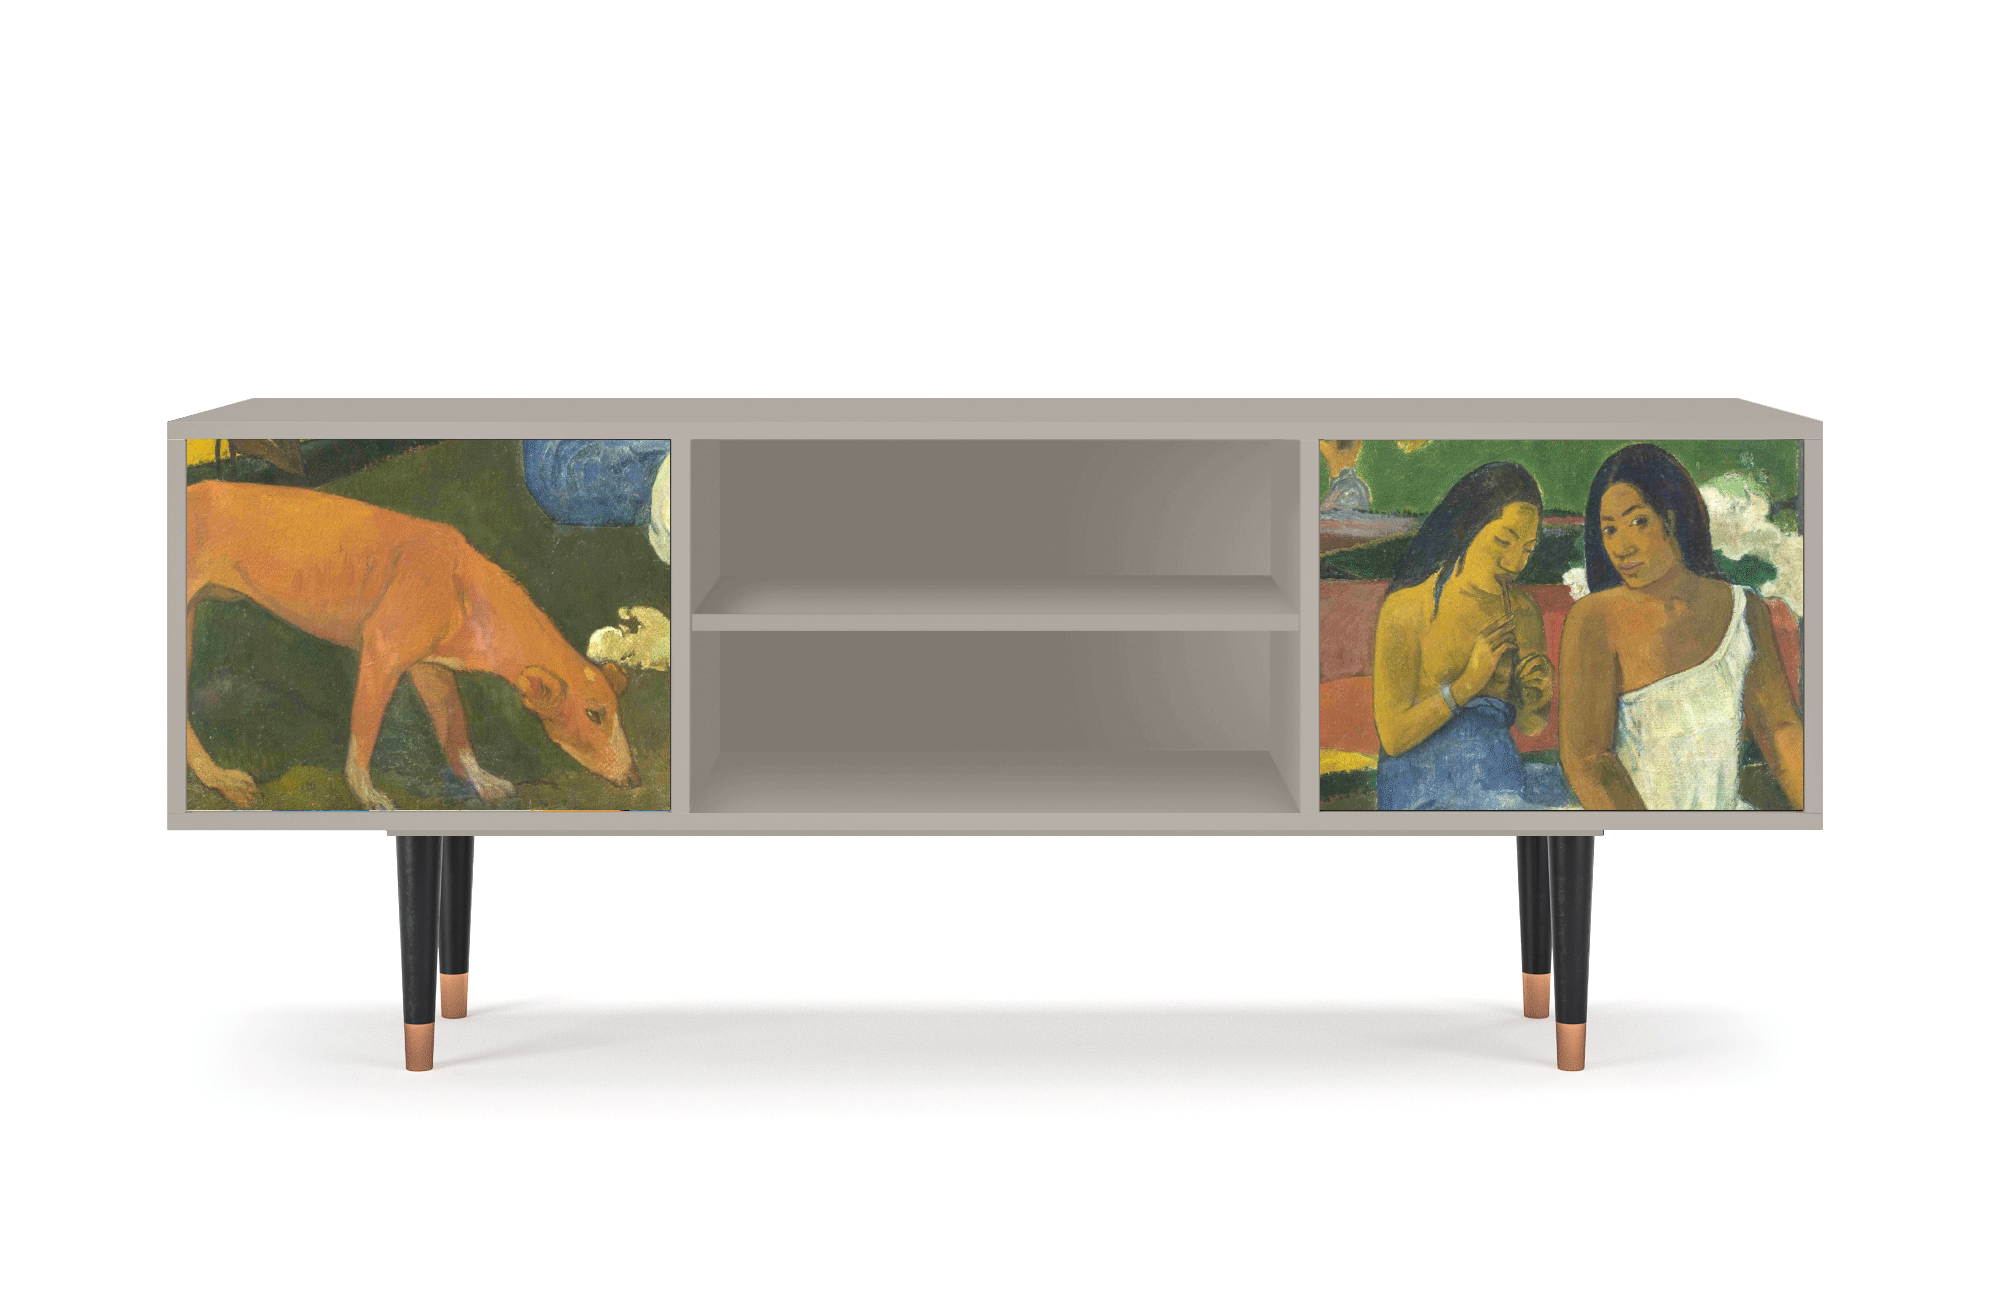 ТВ-Тумба - STORYZ - T2 Arearea by Paul Gauguin, 170 x 69 x 48 см, Сатин - фотография № 2